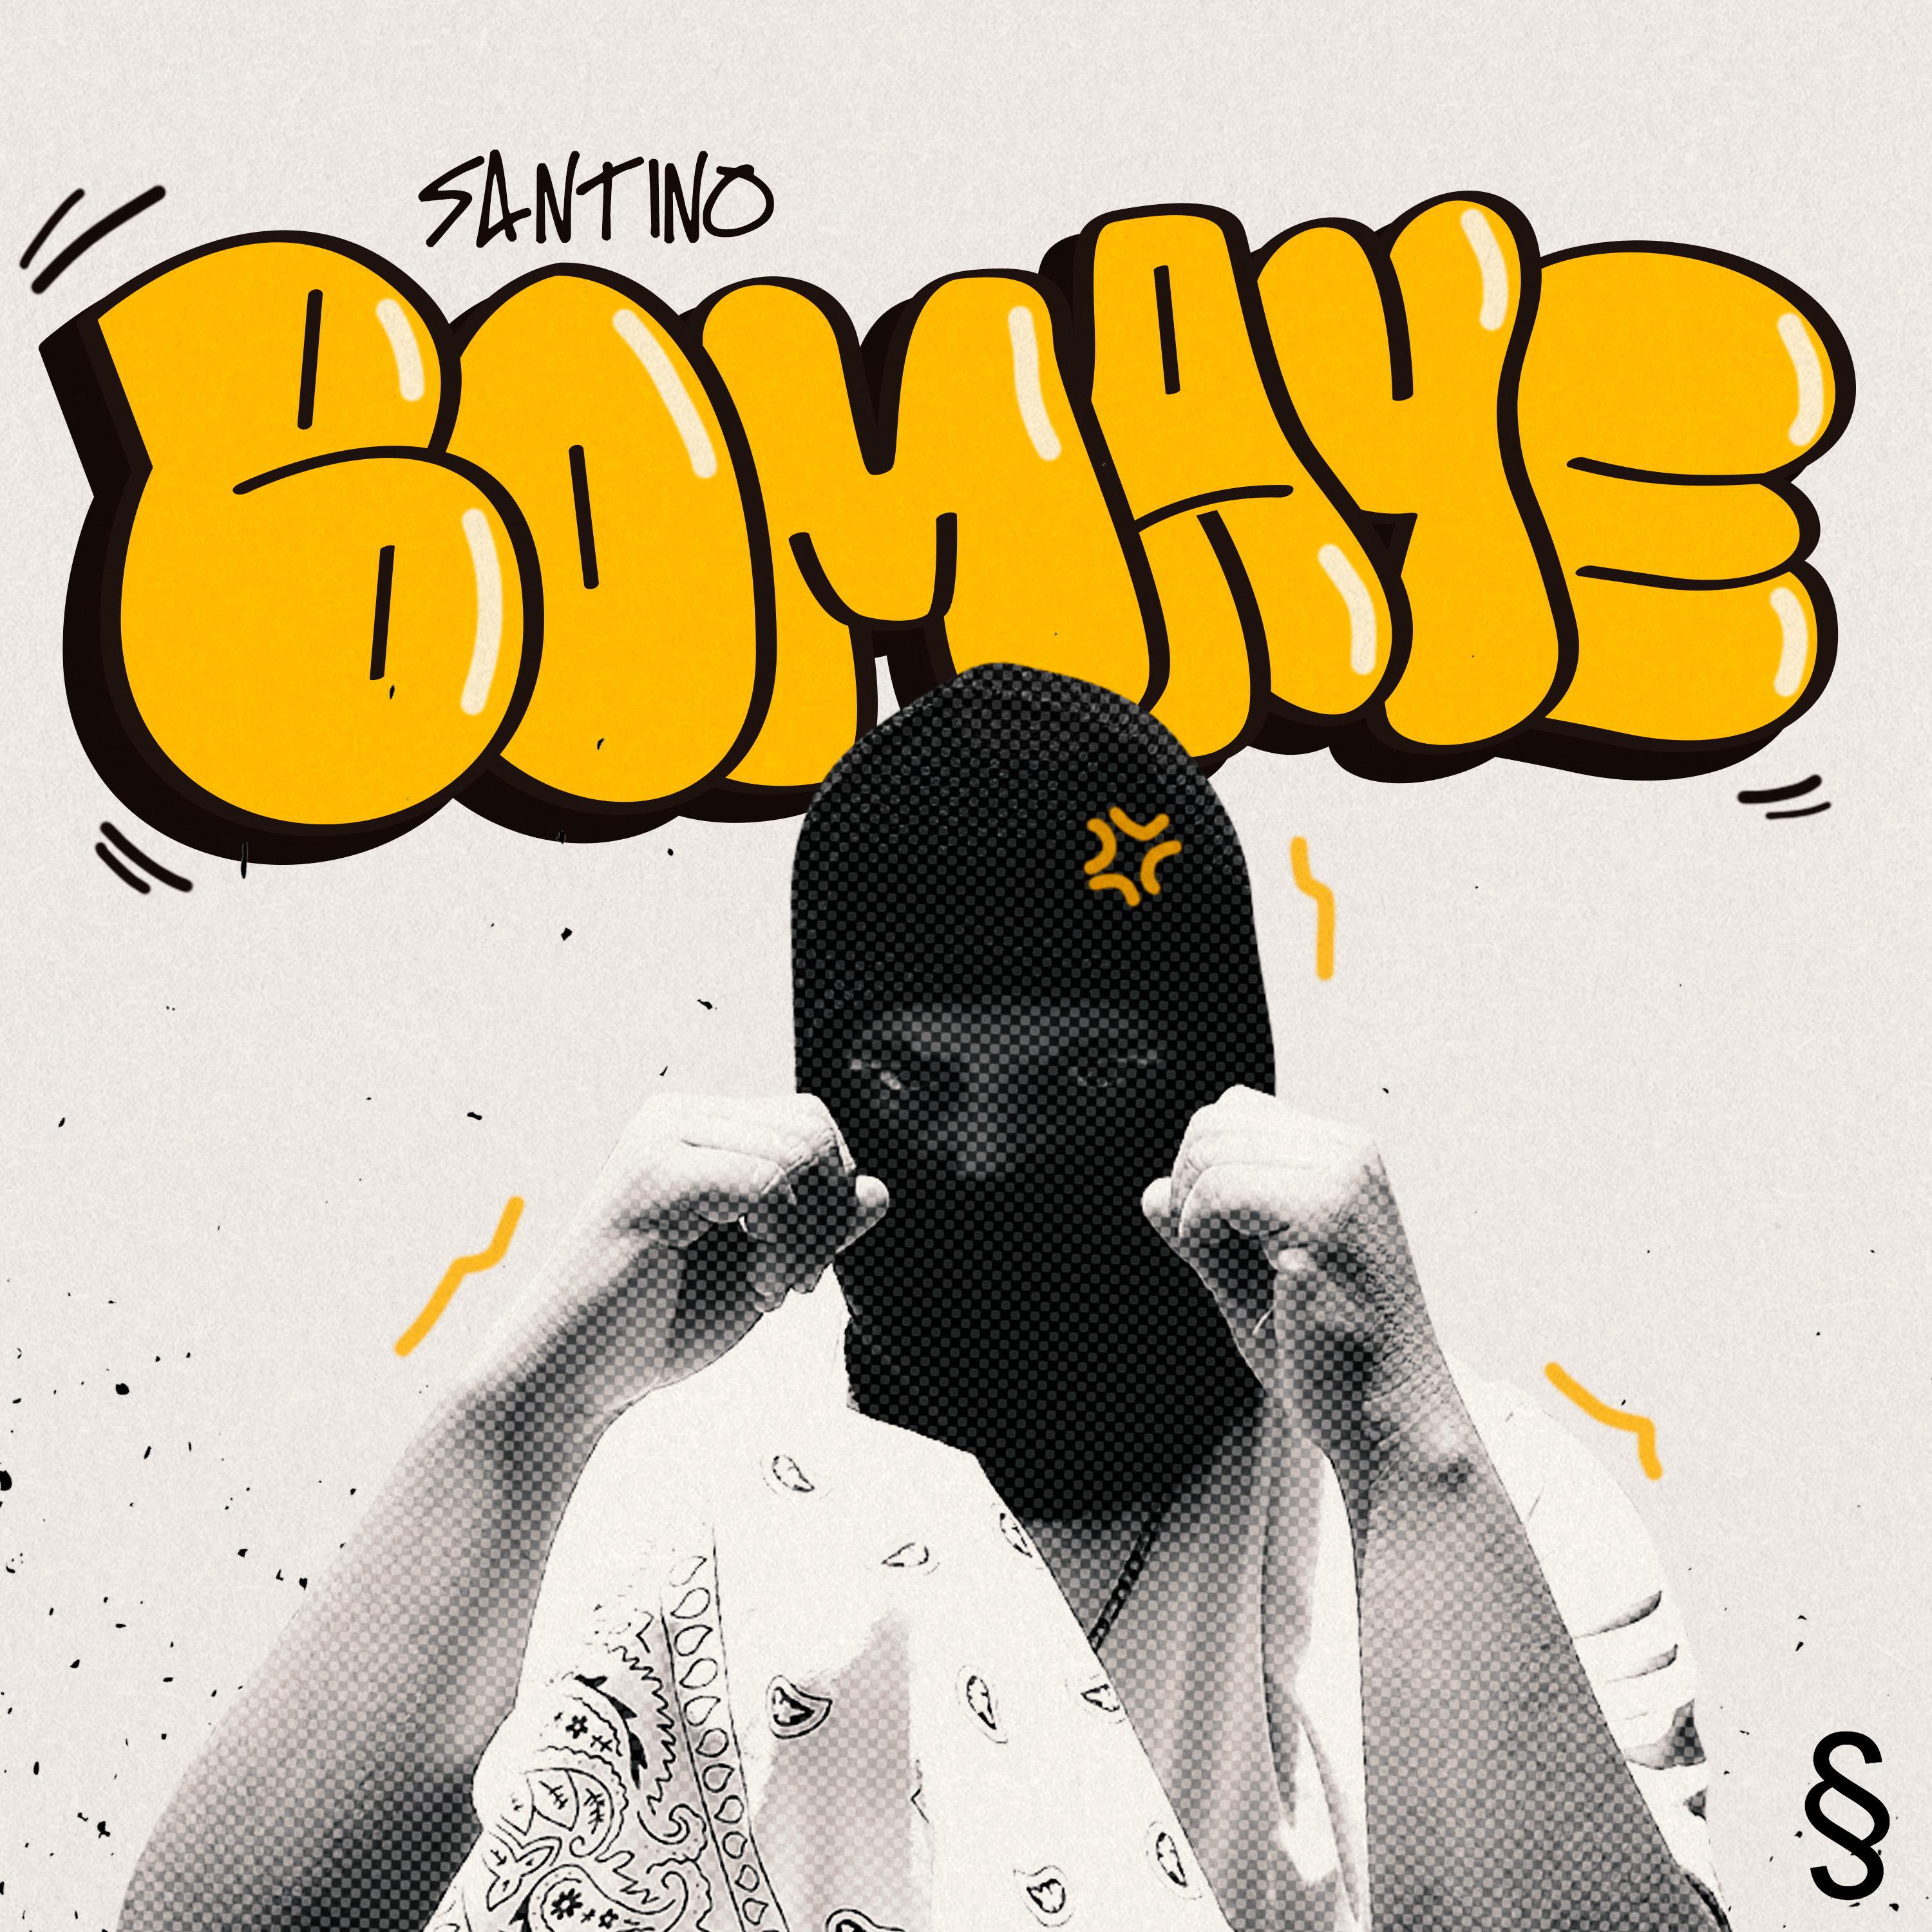 Постер альбома Bomaye